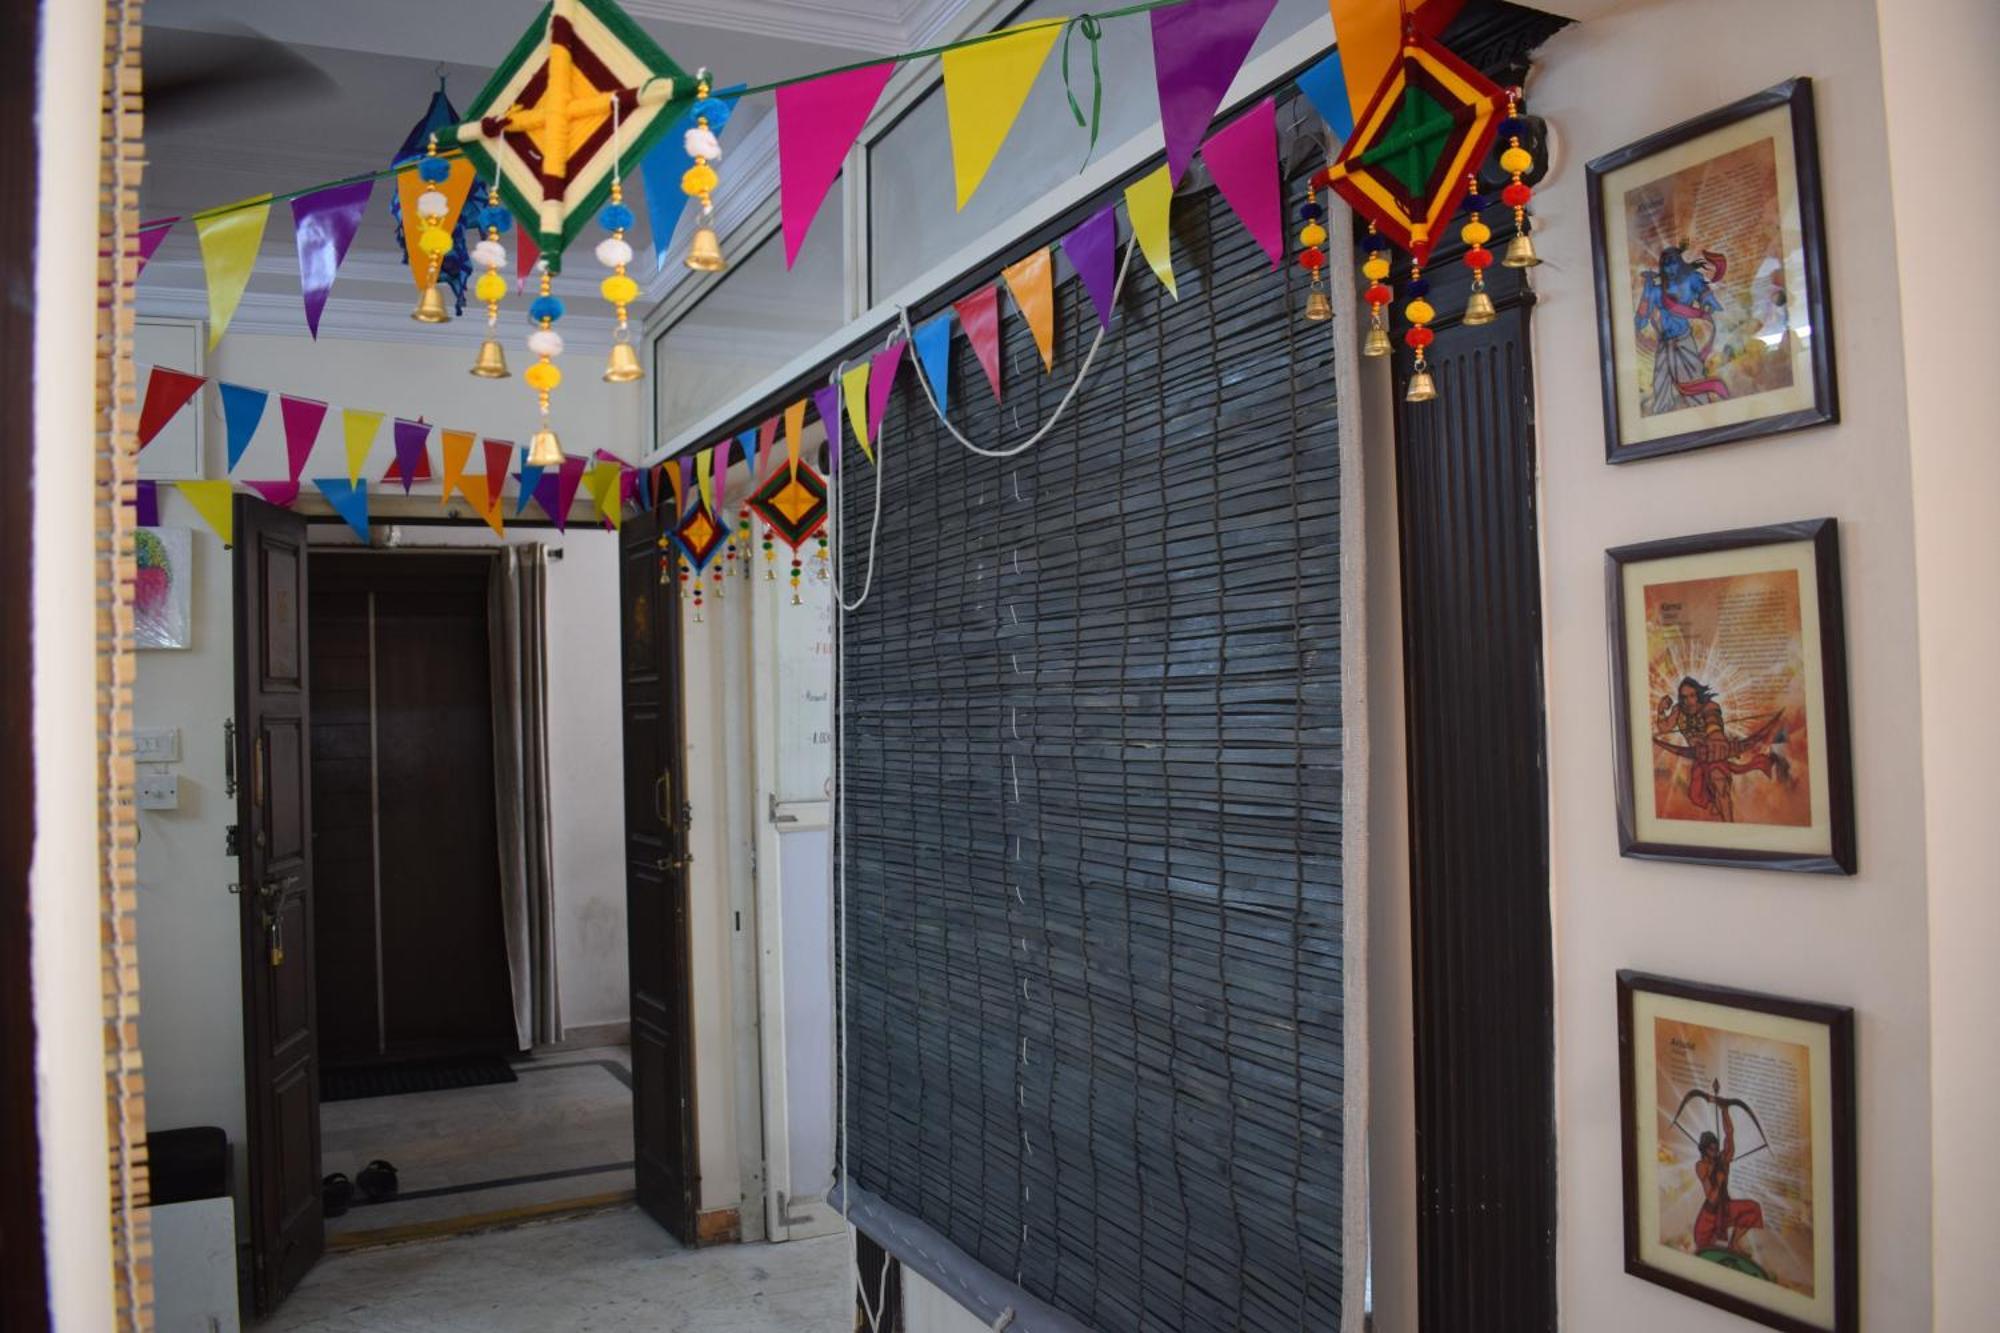 Elysium Inn Hyderabad Exterior photo